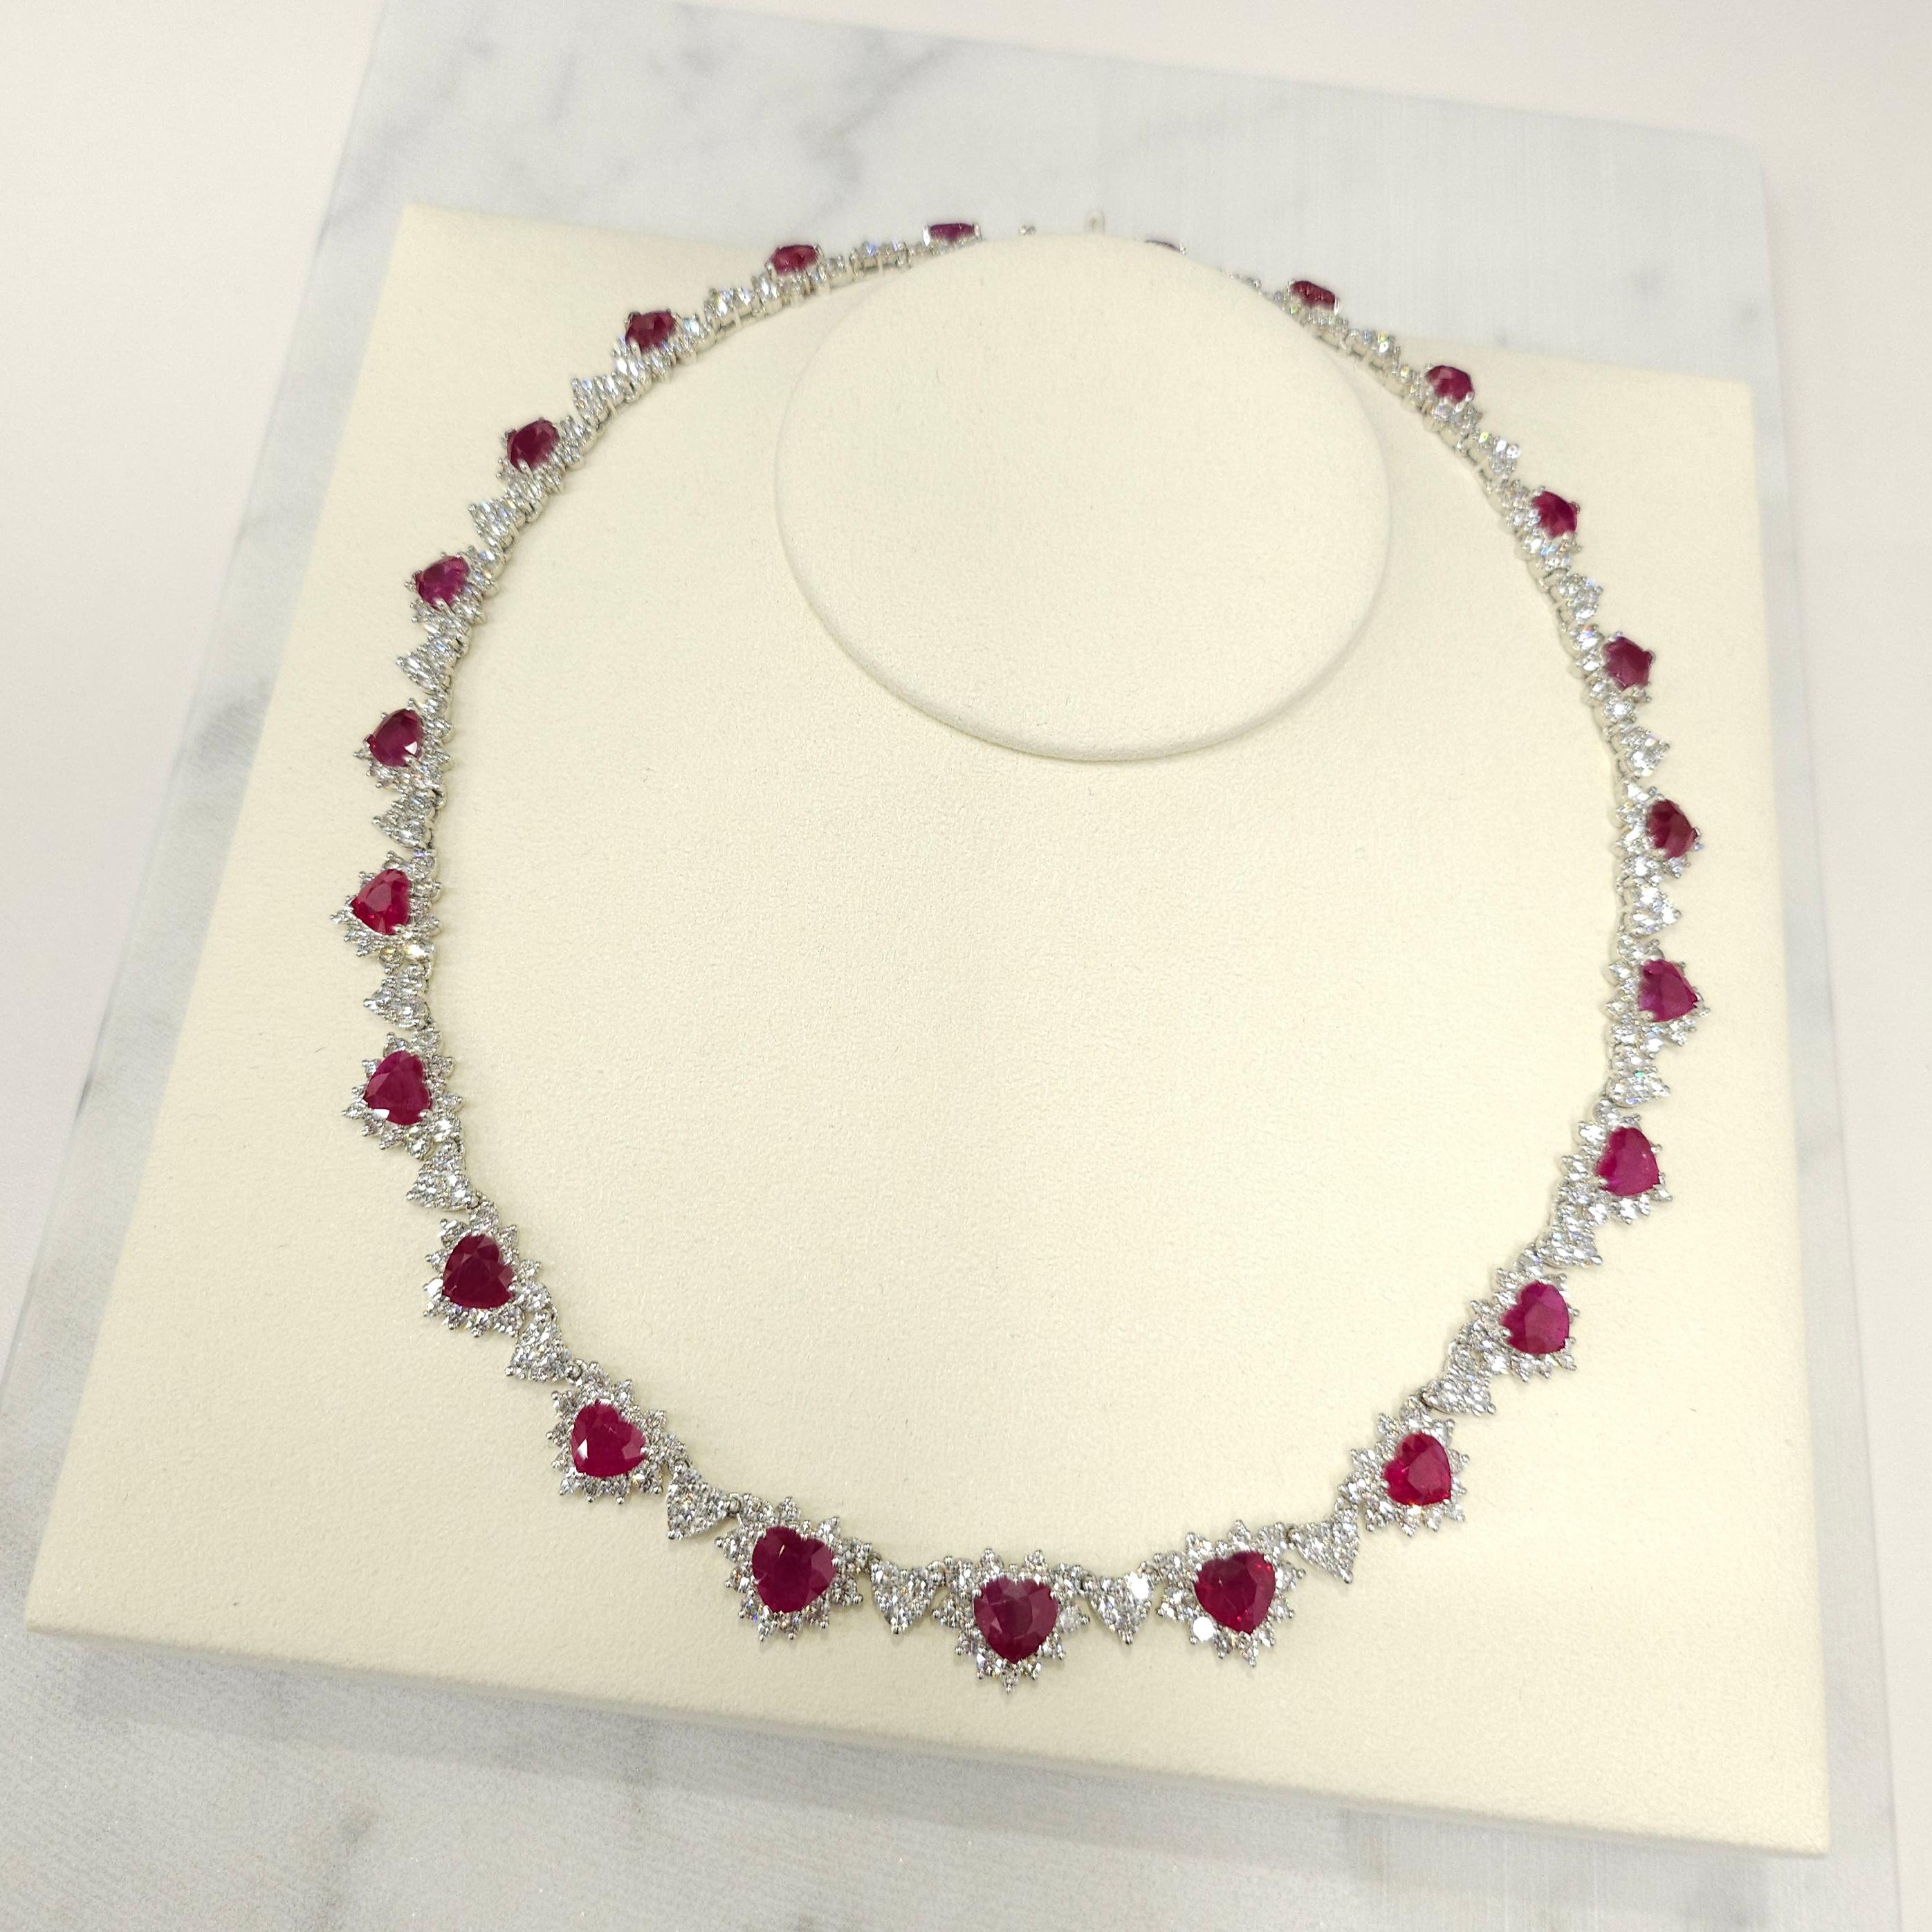 IGI Certified 26.58 Carat Burma Ruby & 18.85 Carat Diamond Necklace in 18K Gold For Sale 10